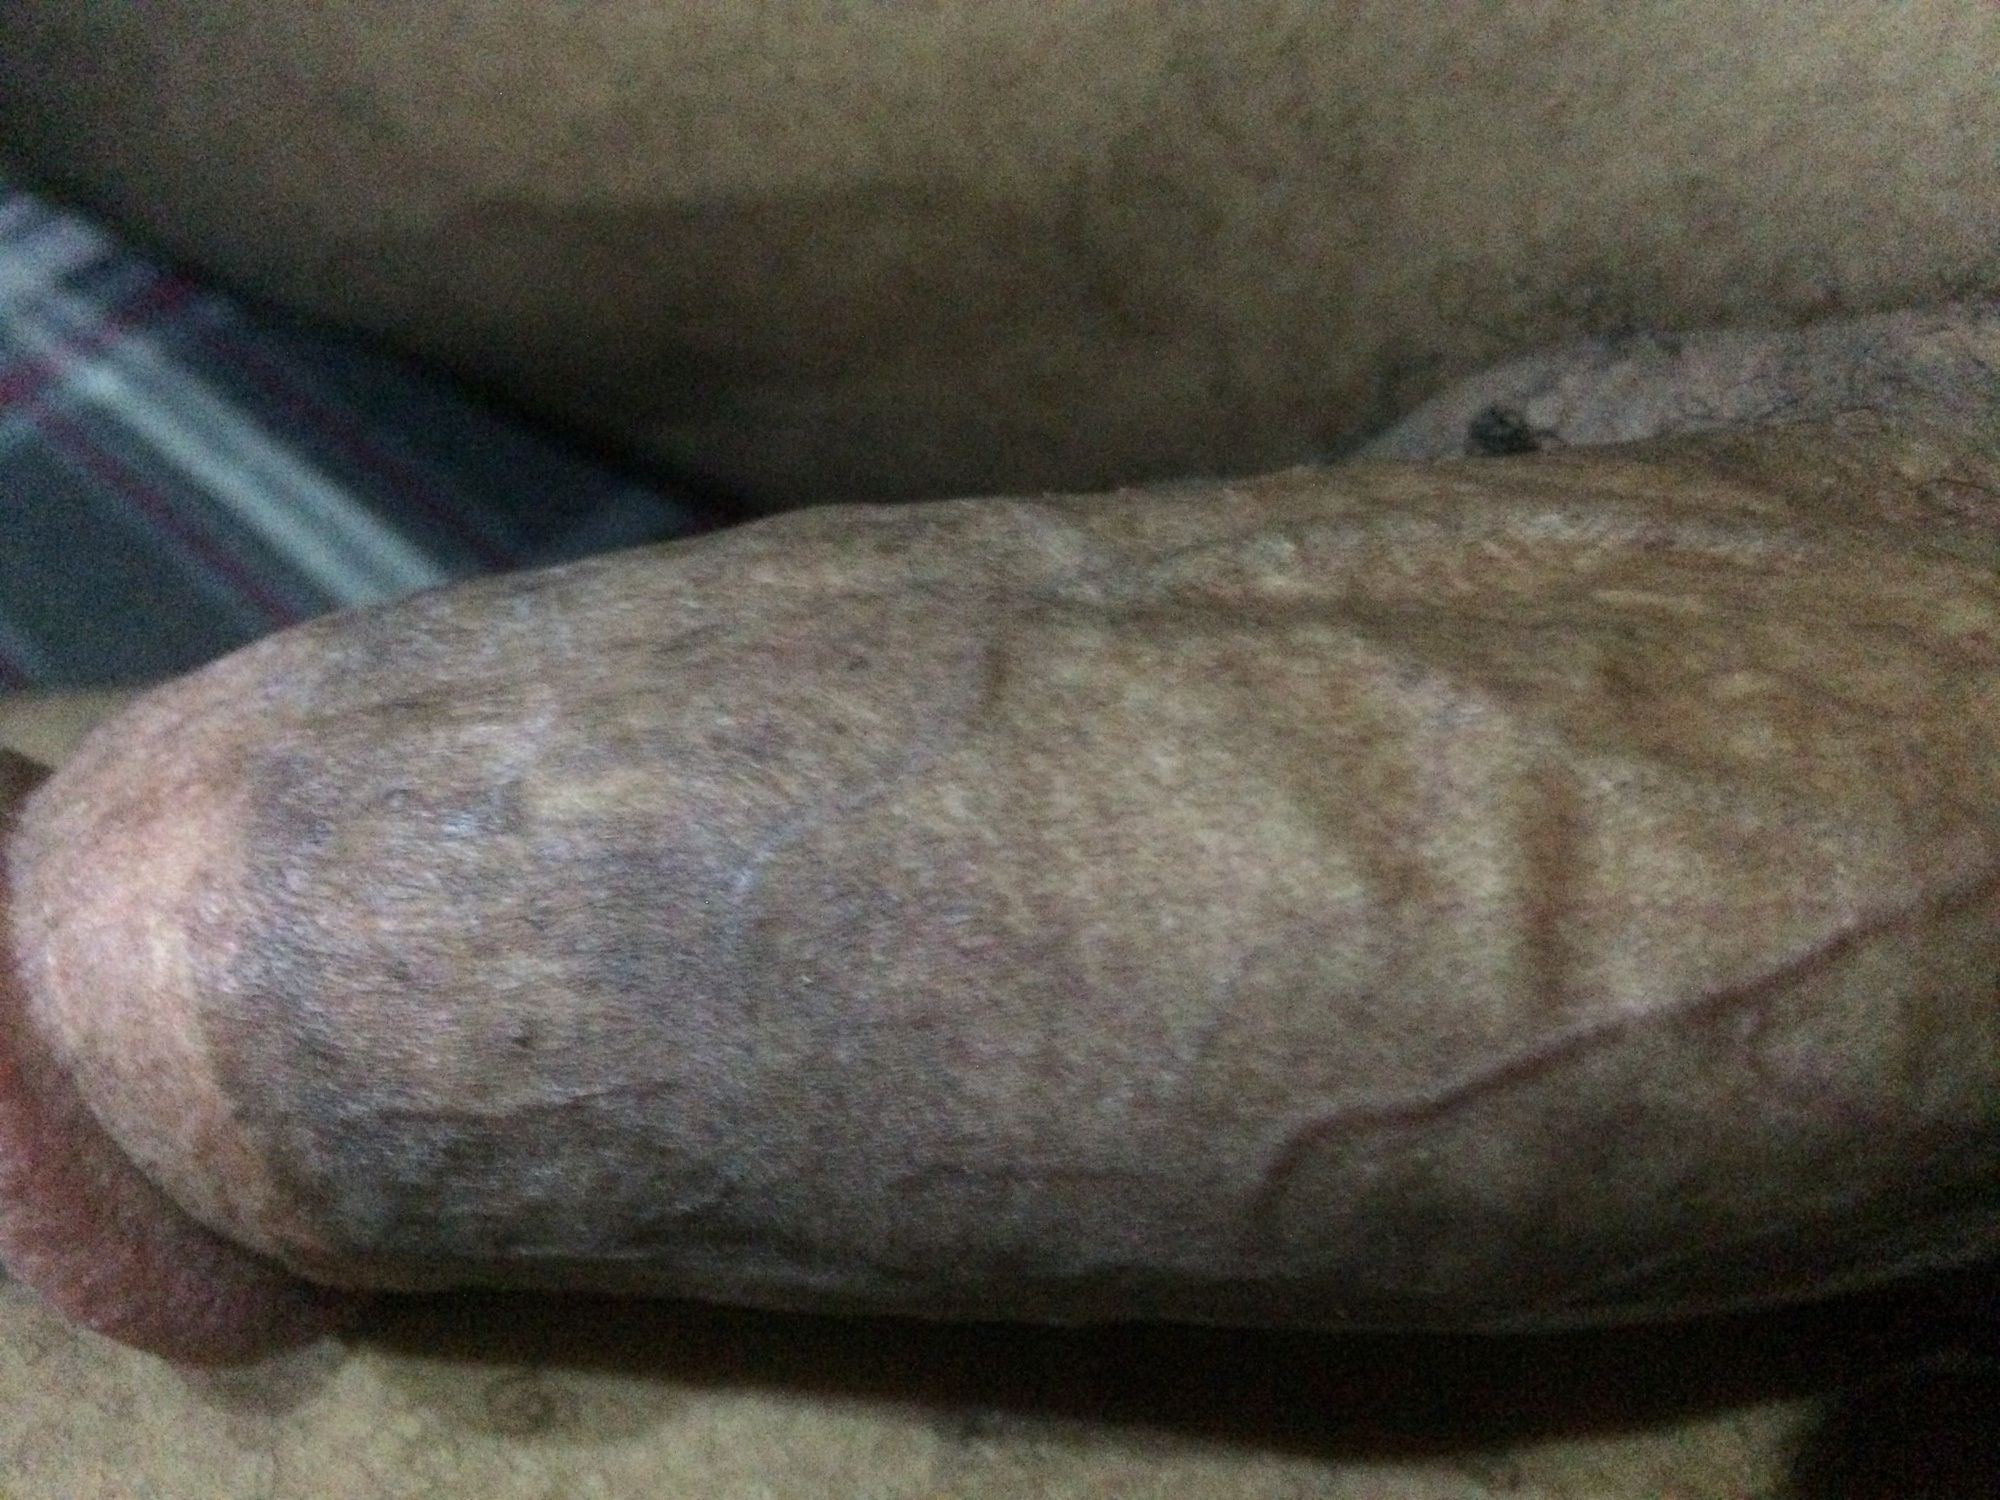 My Big Dick #2